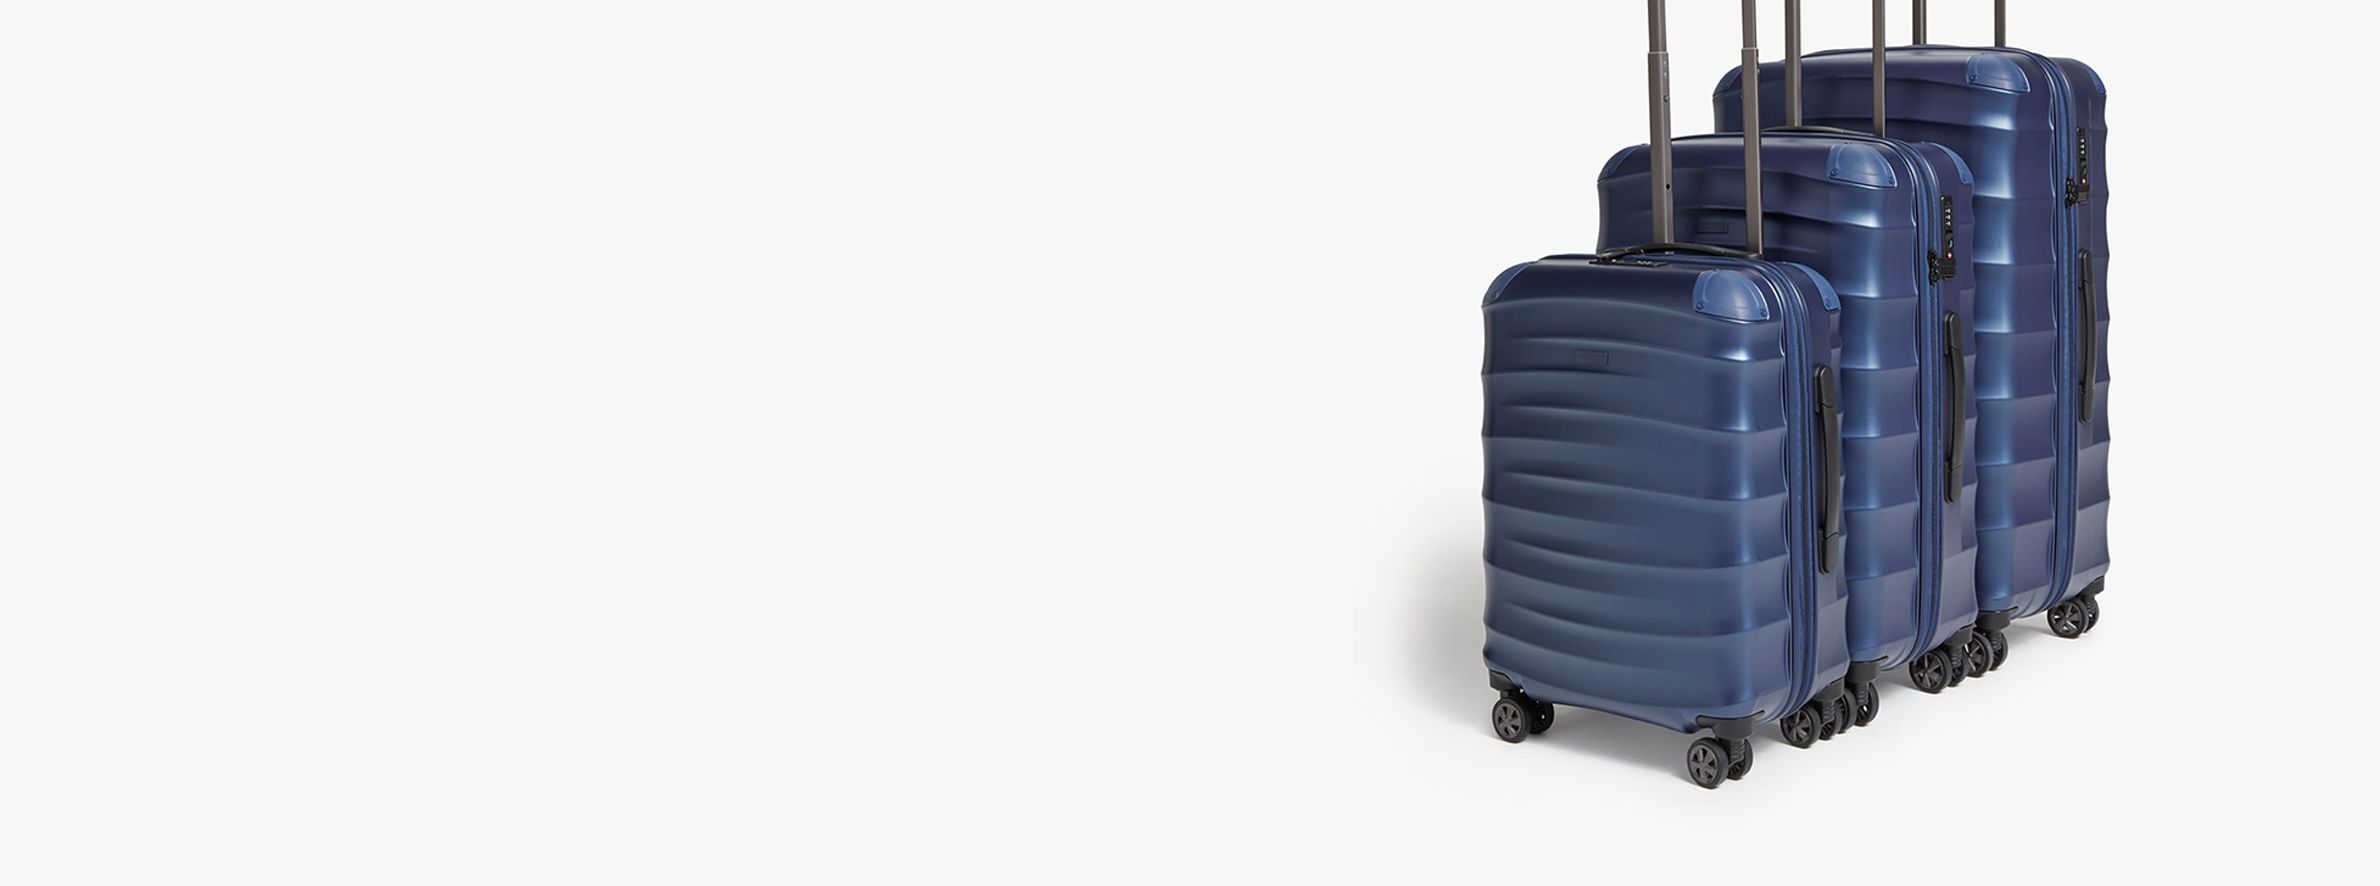 Suitcases | Cabin, Medium and Large Suitcases | John Lewis